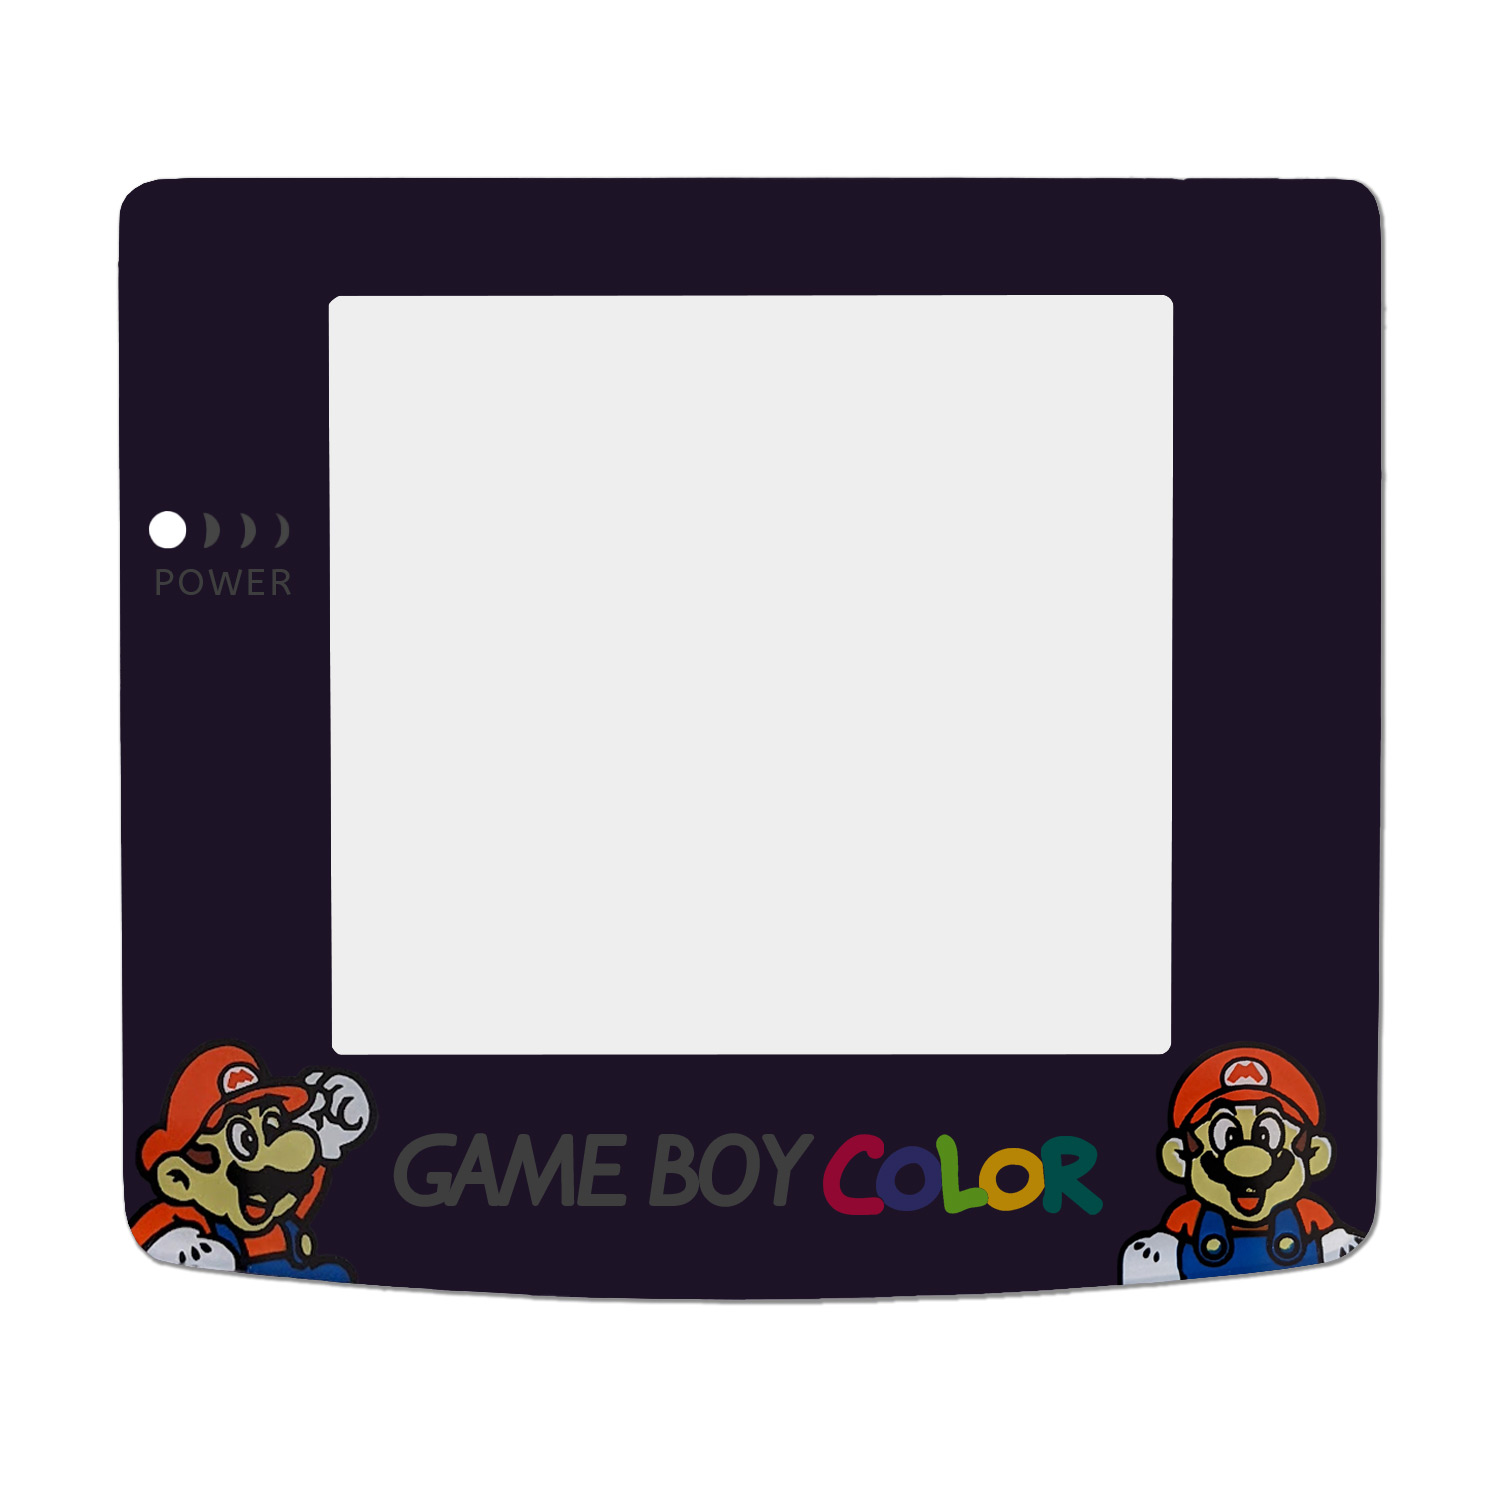 Game Boy Color Display Disc (Mario)